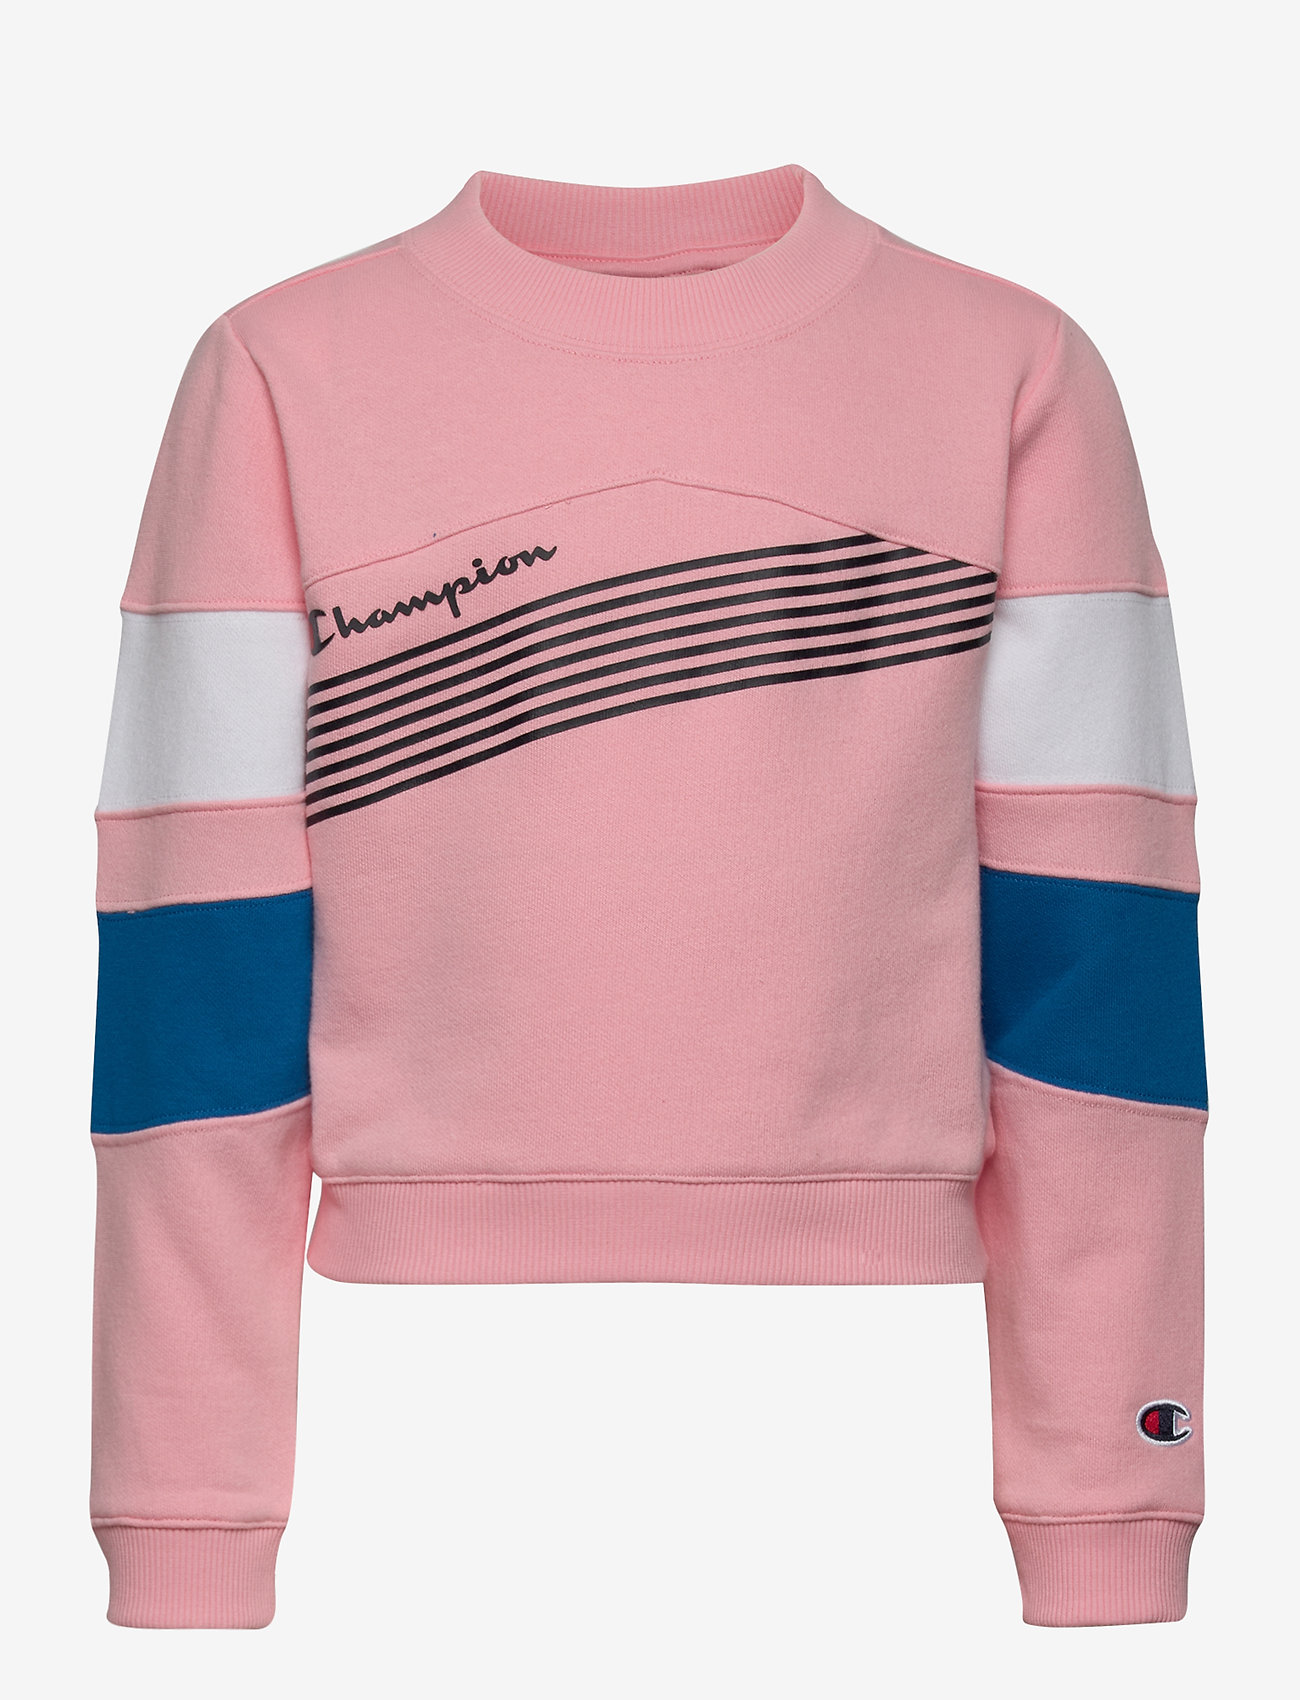 champion crewneck sweatshirt pink